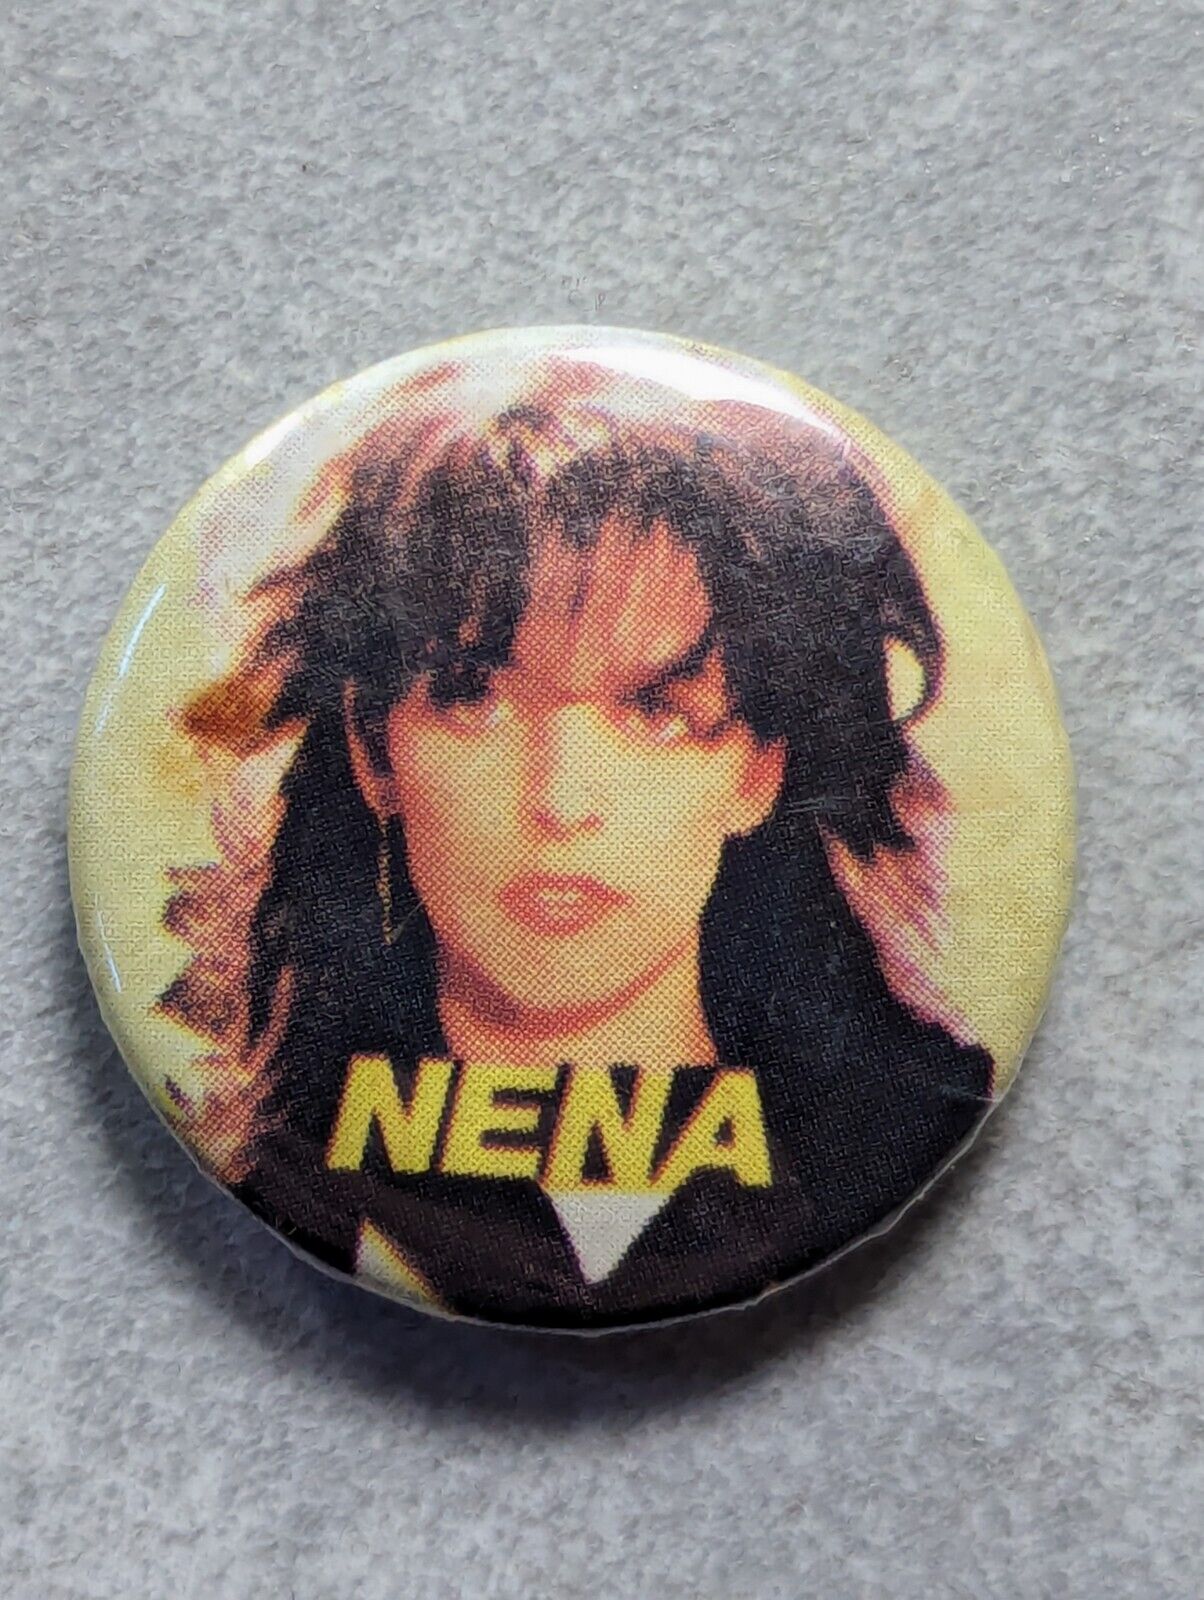 Vintage 80s Nena Pin Badge Purchased Around 1986